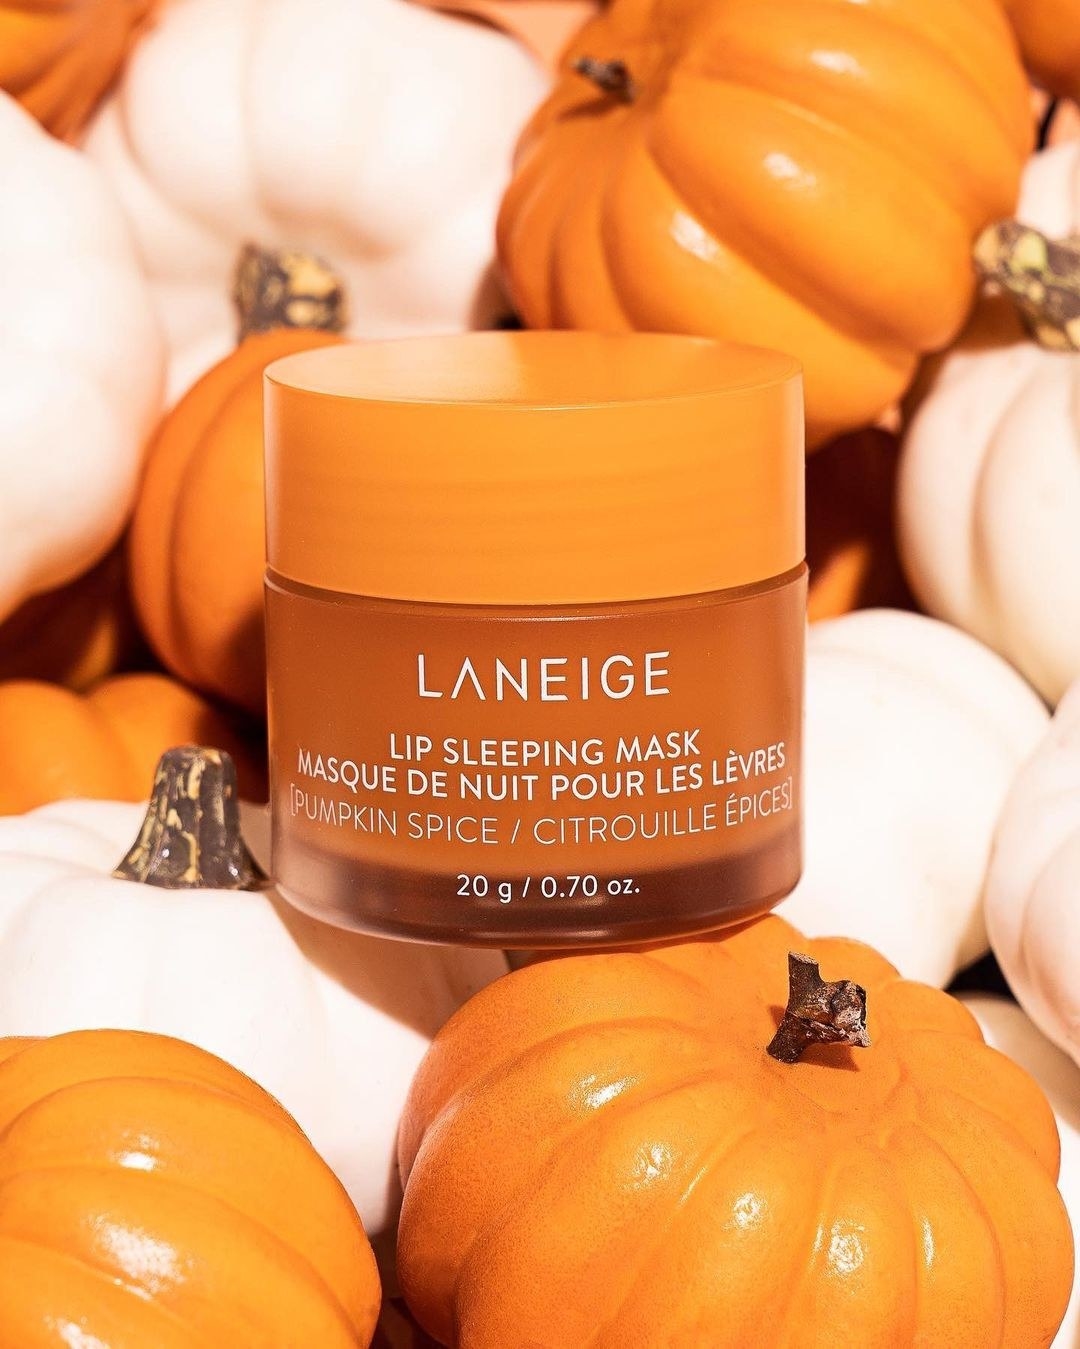 The Laneige lip mask on a pile of pumpkins